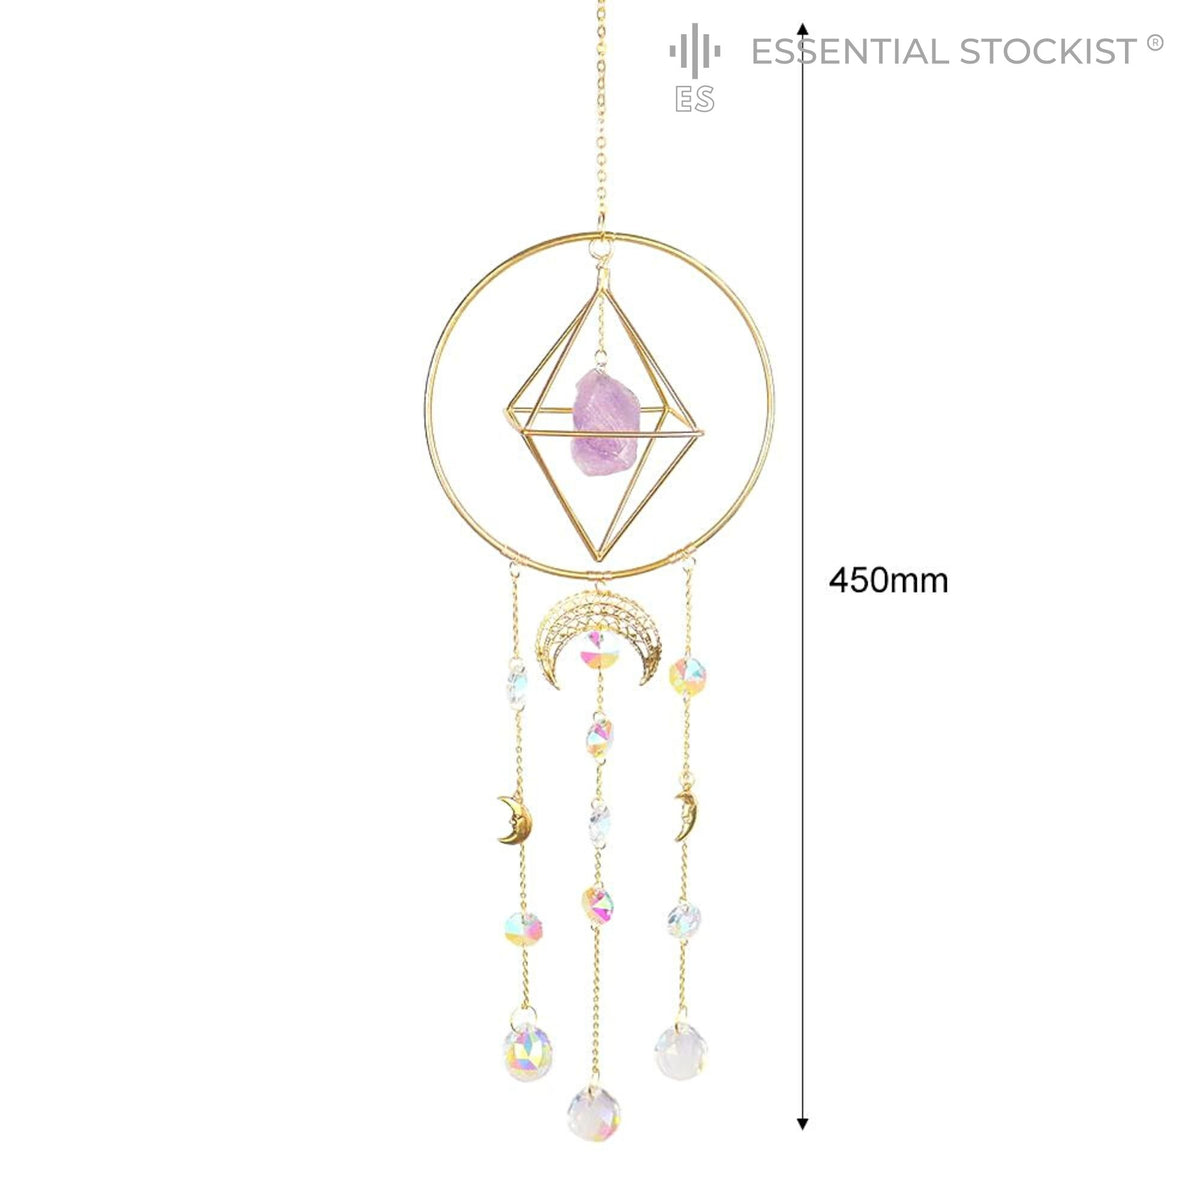 Rose Quartz Crystal Suncatcher - ESSENTIAL STOCKIST ESSENTIAL STOCKIST